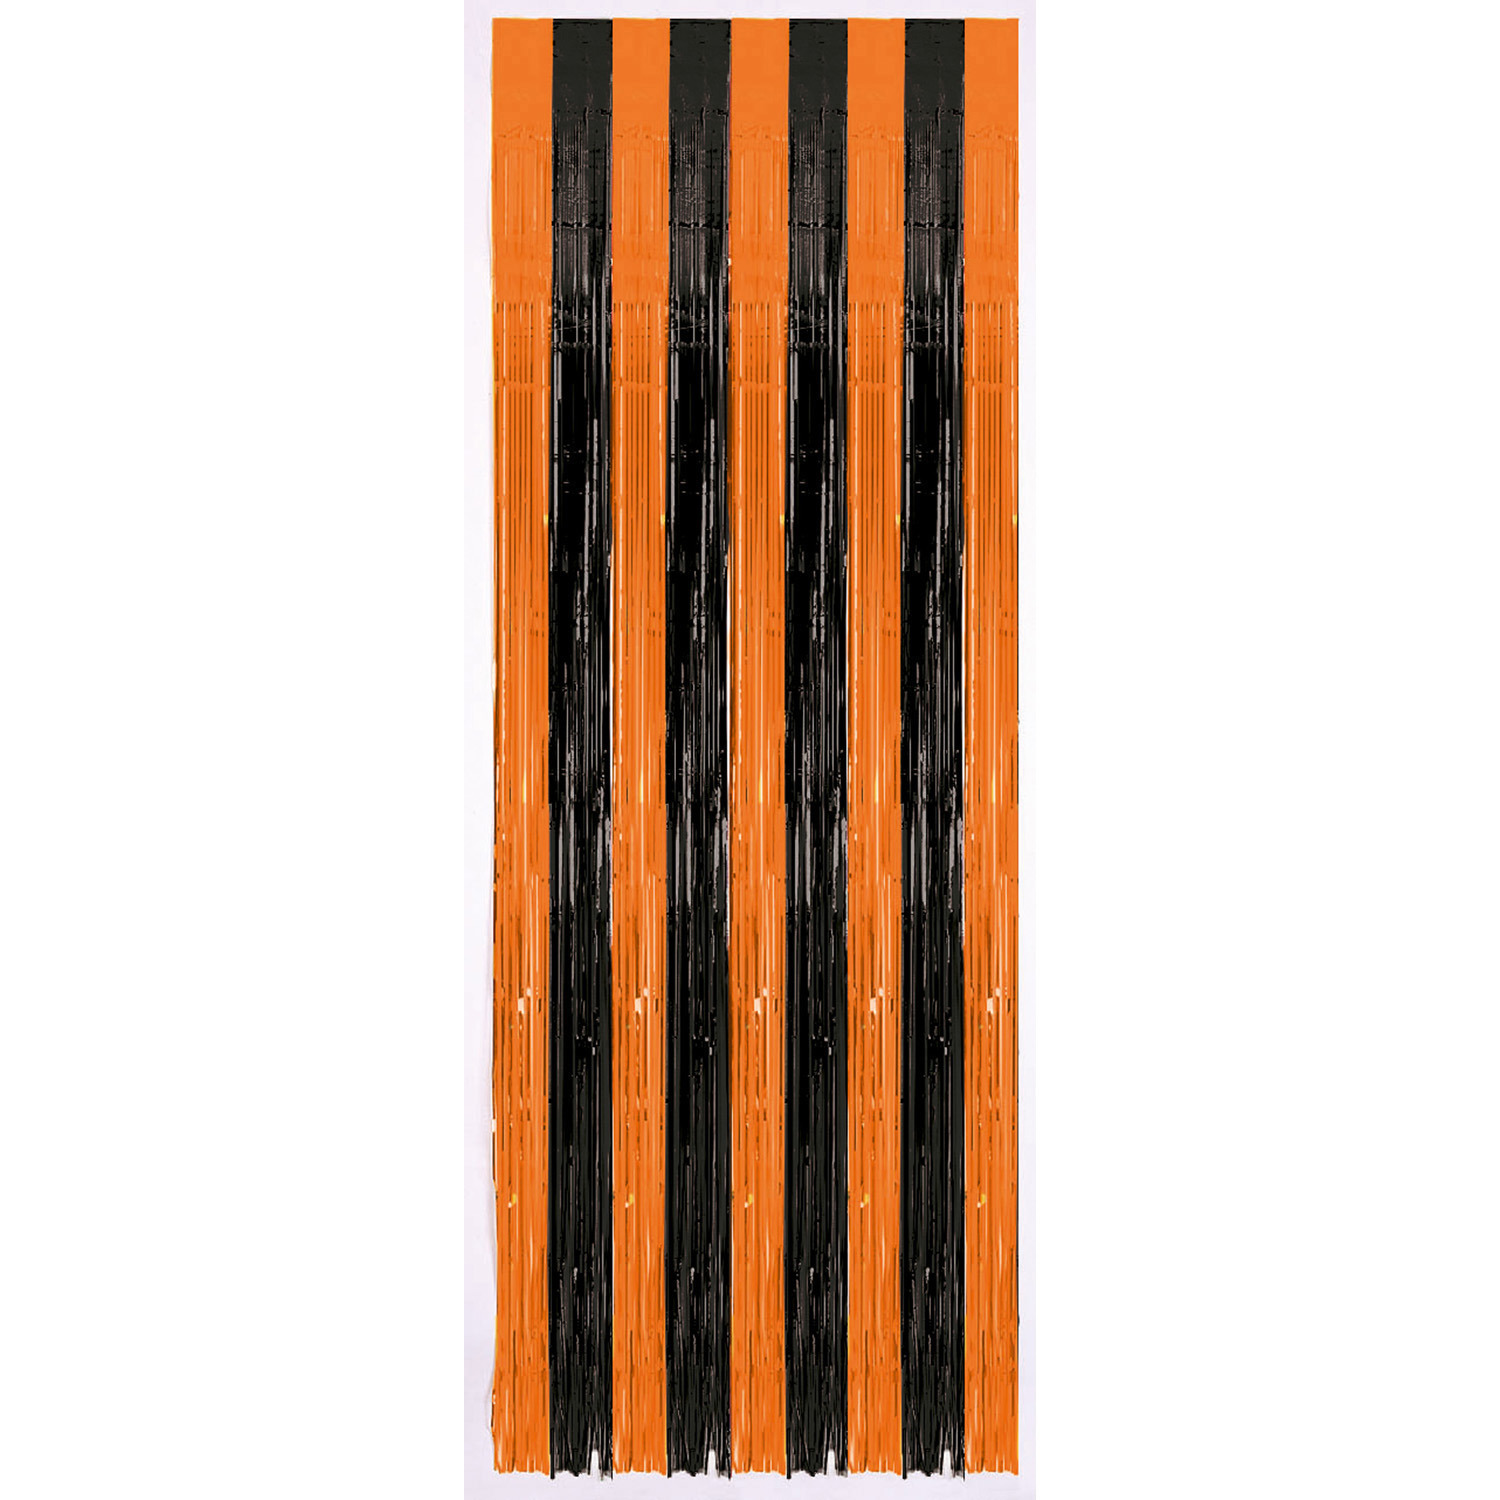 Folie deurgordijn zwart-oranje metallic 243 x 91 cm